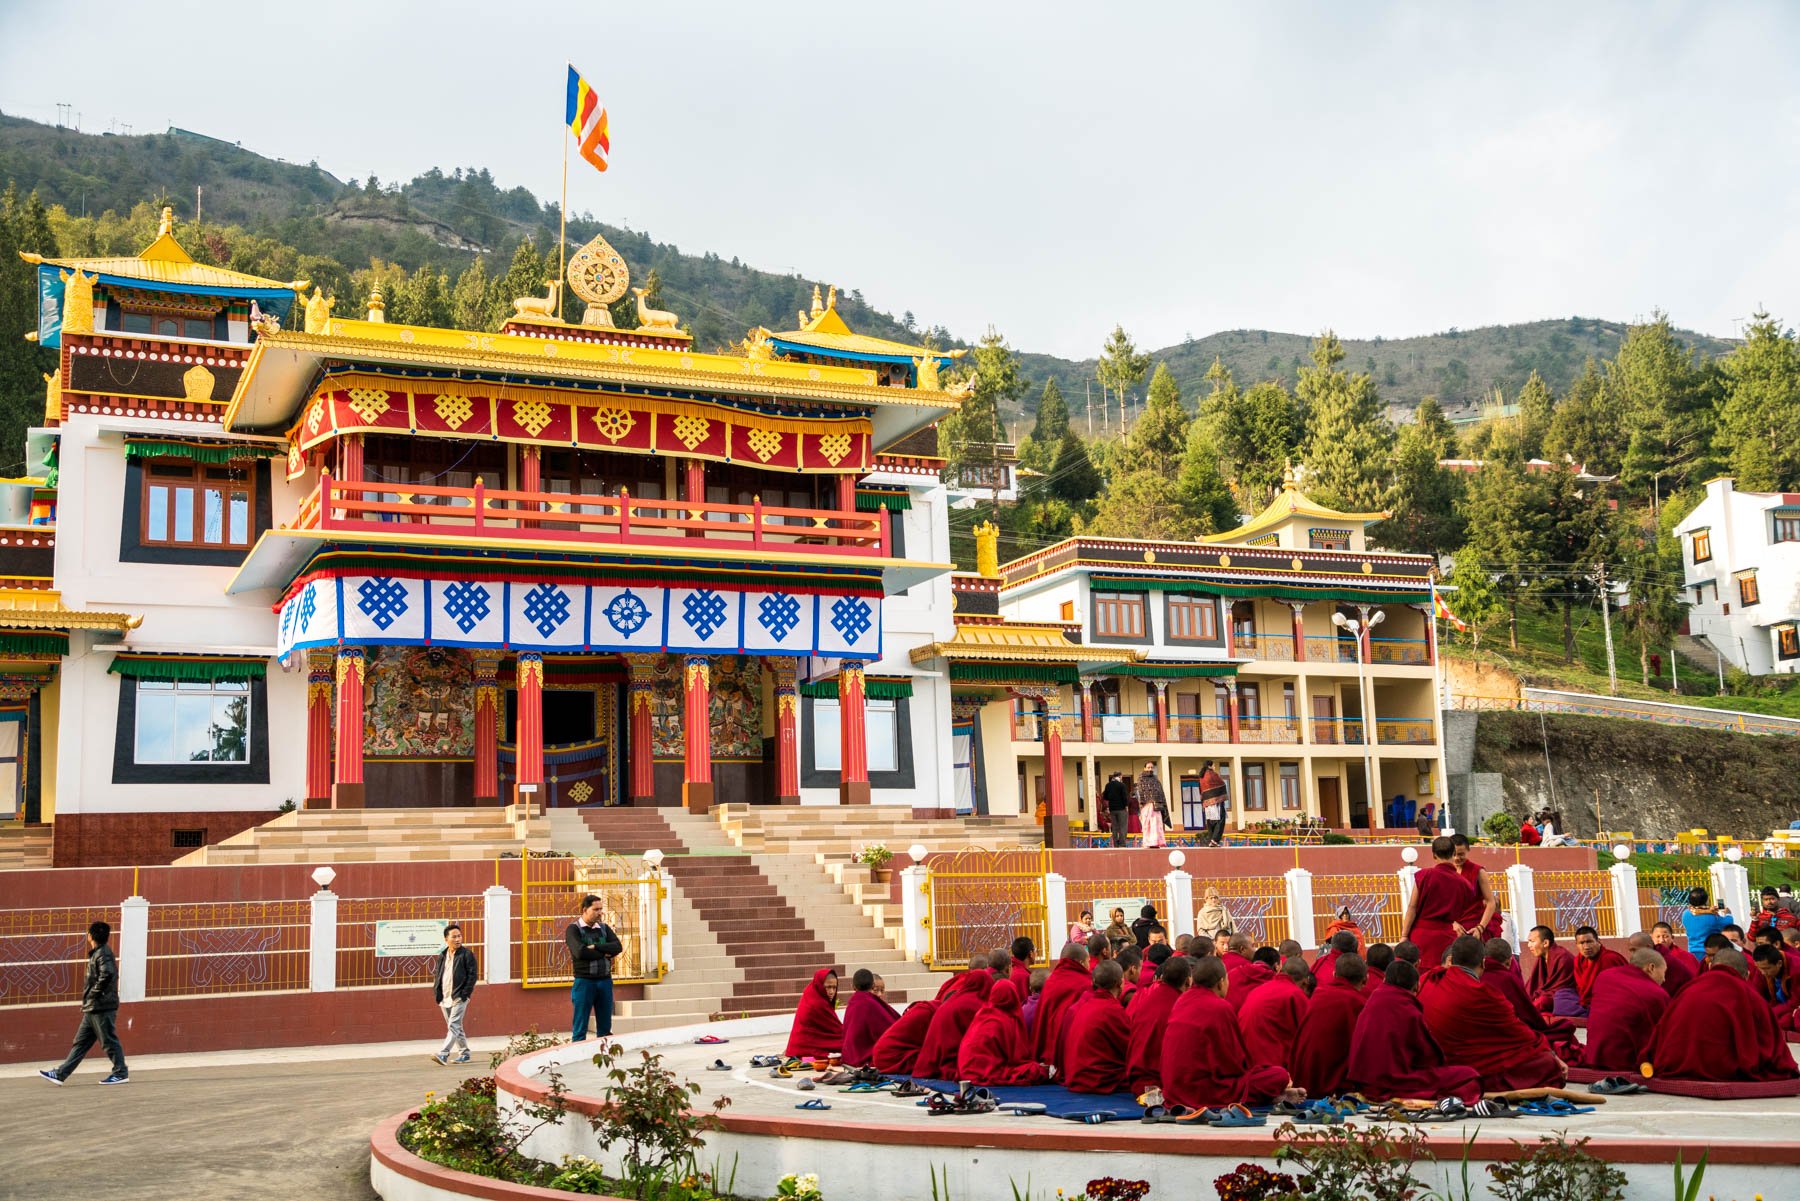 Backpacking in Arunachal Pradesh travel guide - Monks practicing Tibetan philosophical debate outside Upper Gompa - Lost With Purpose